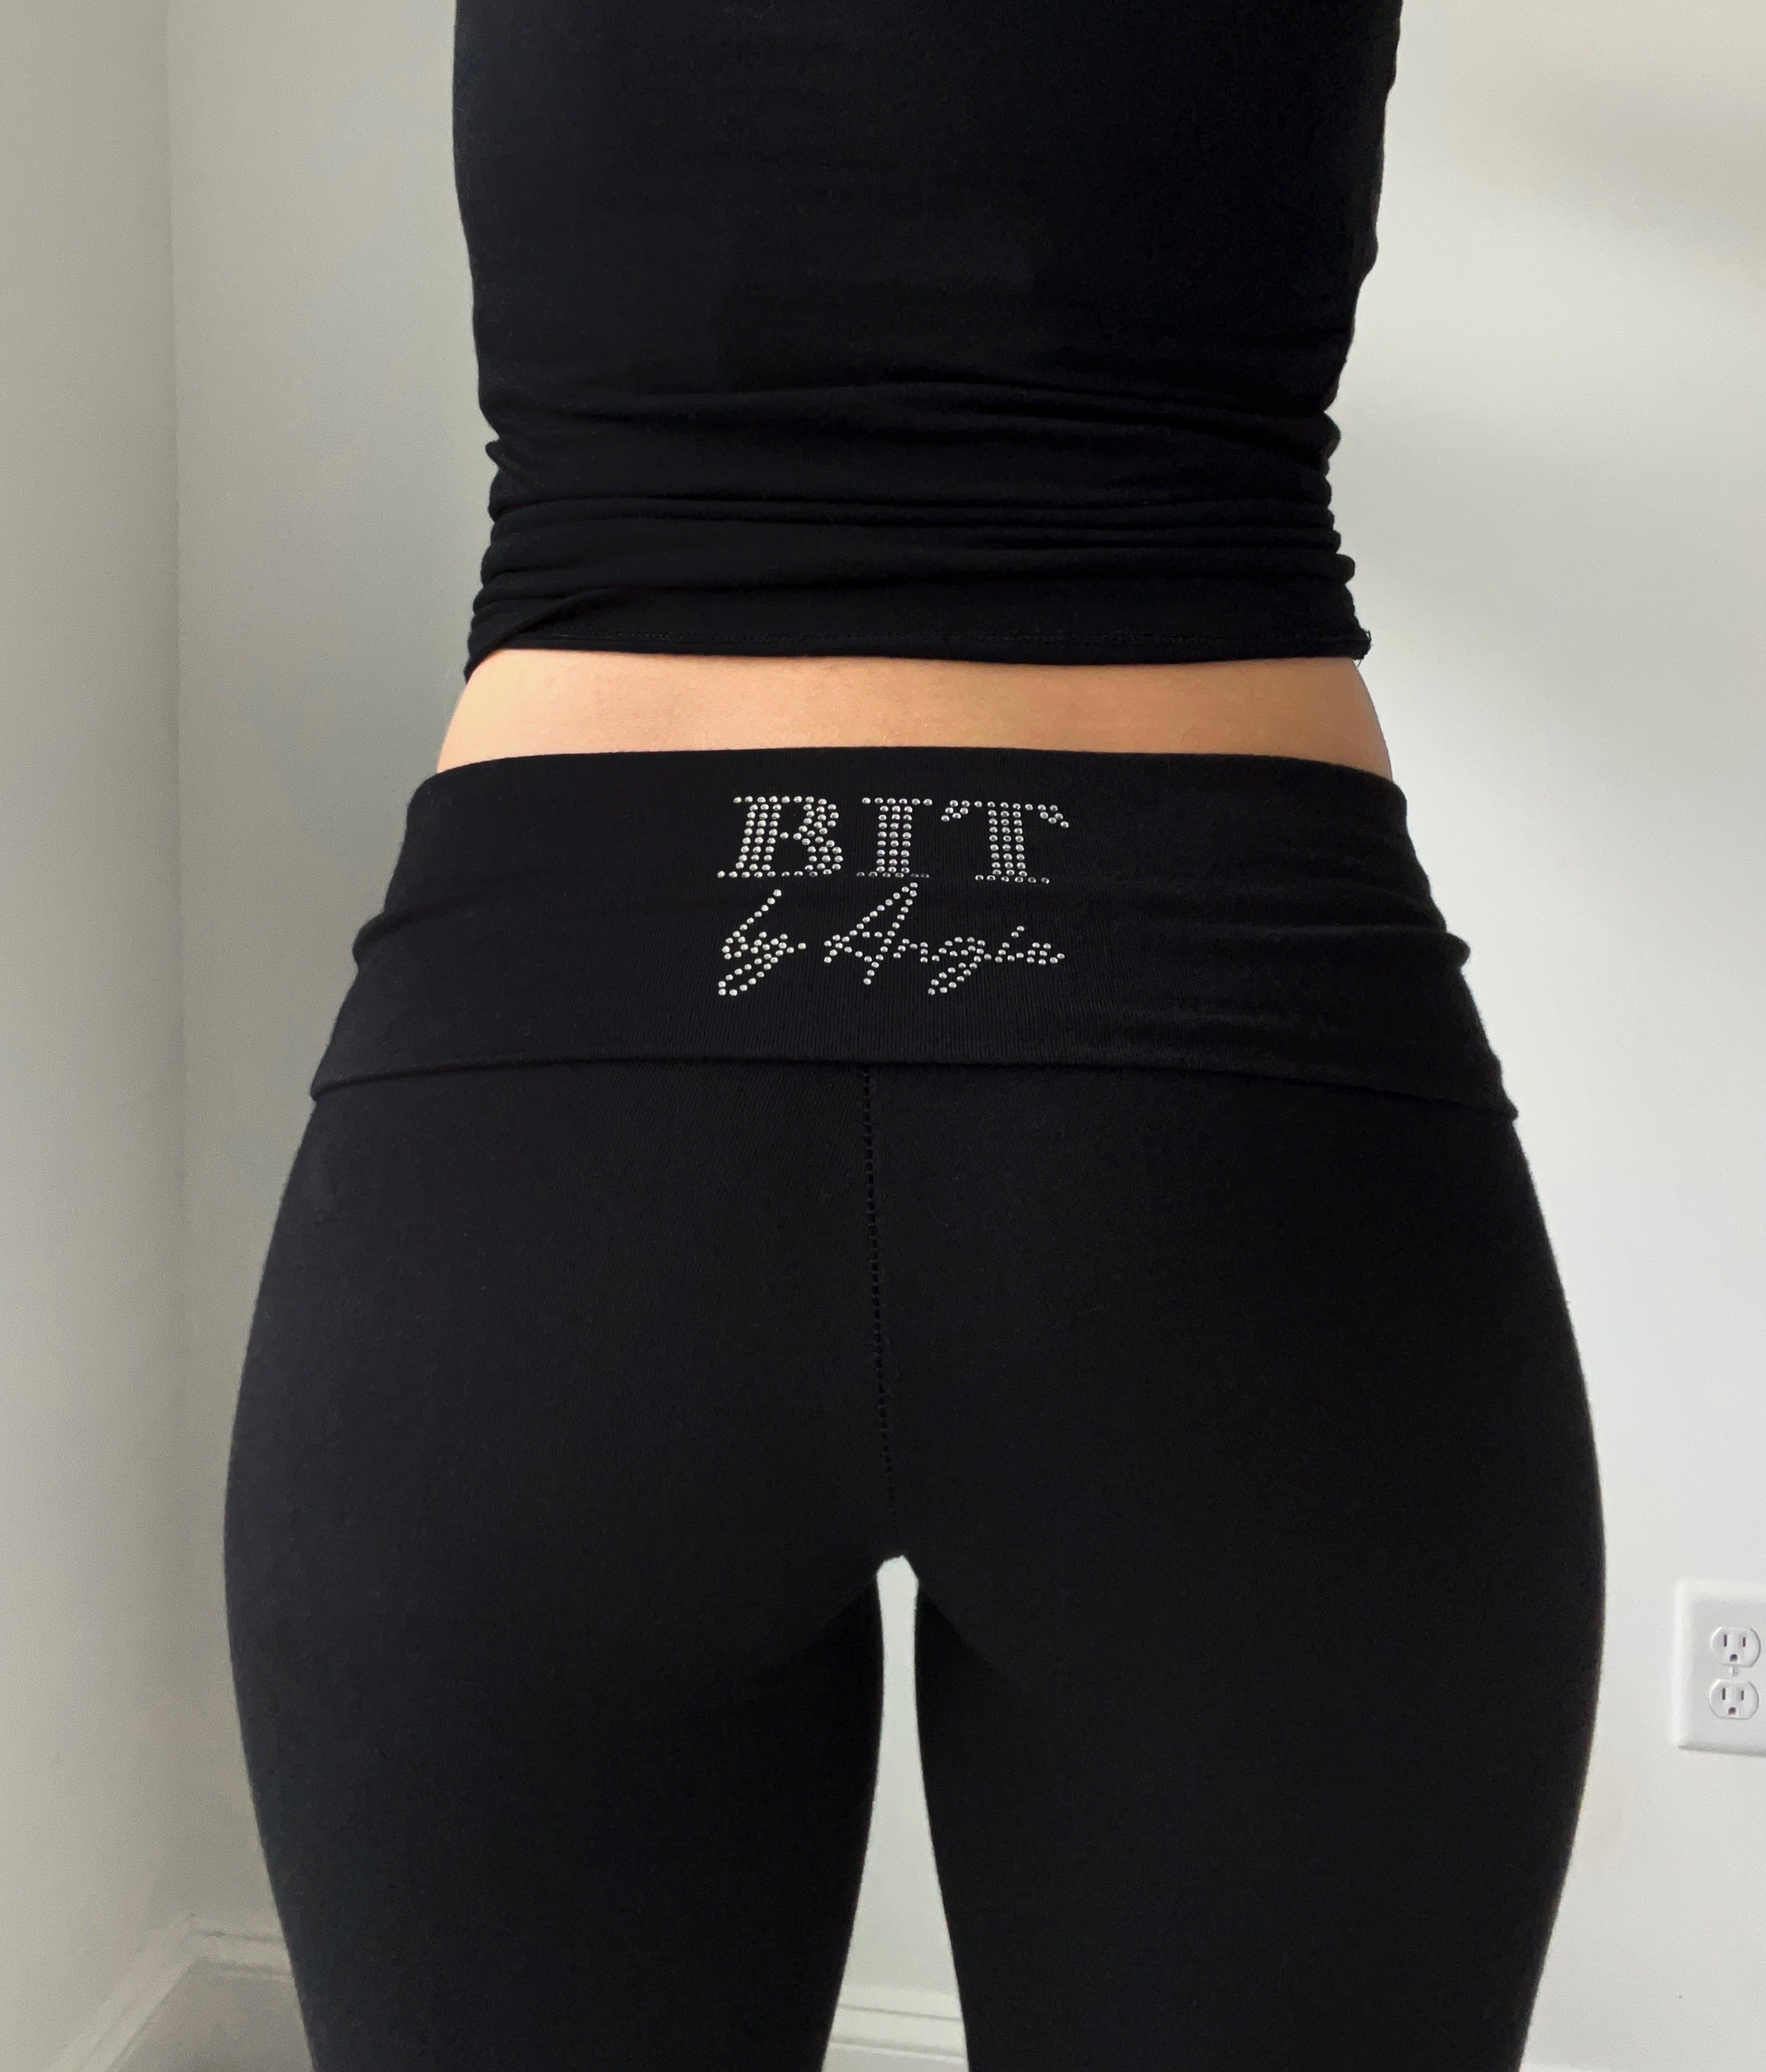 Bride Rhinestone Block Font Yoga Pants